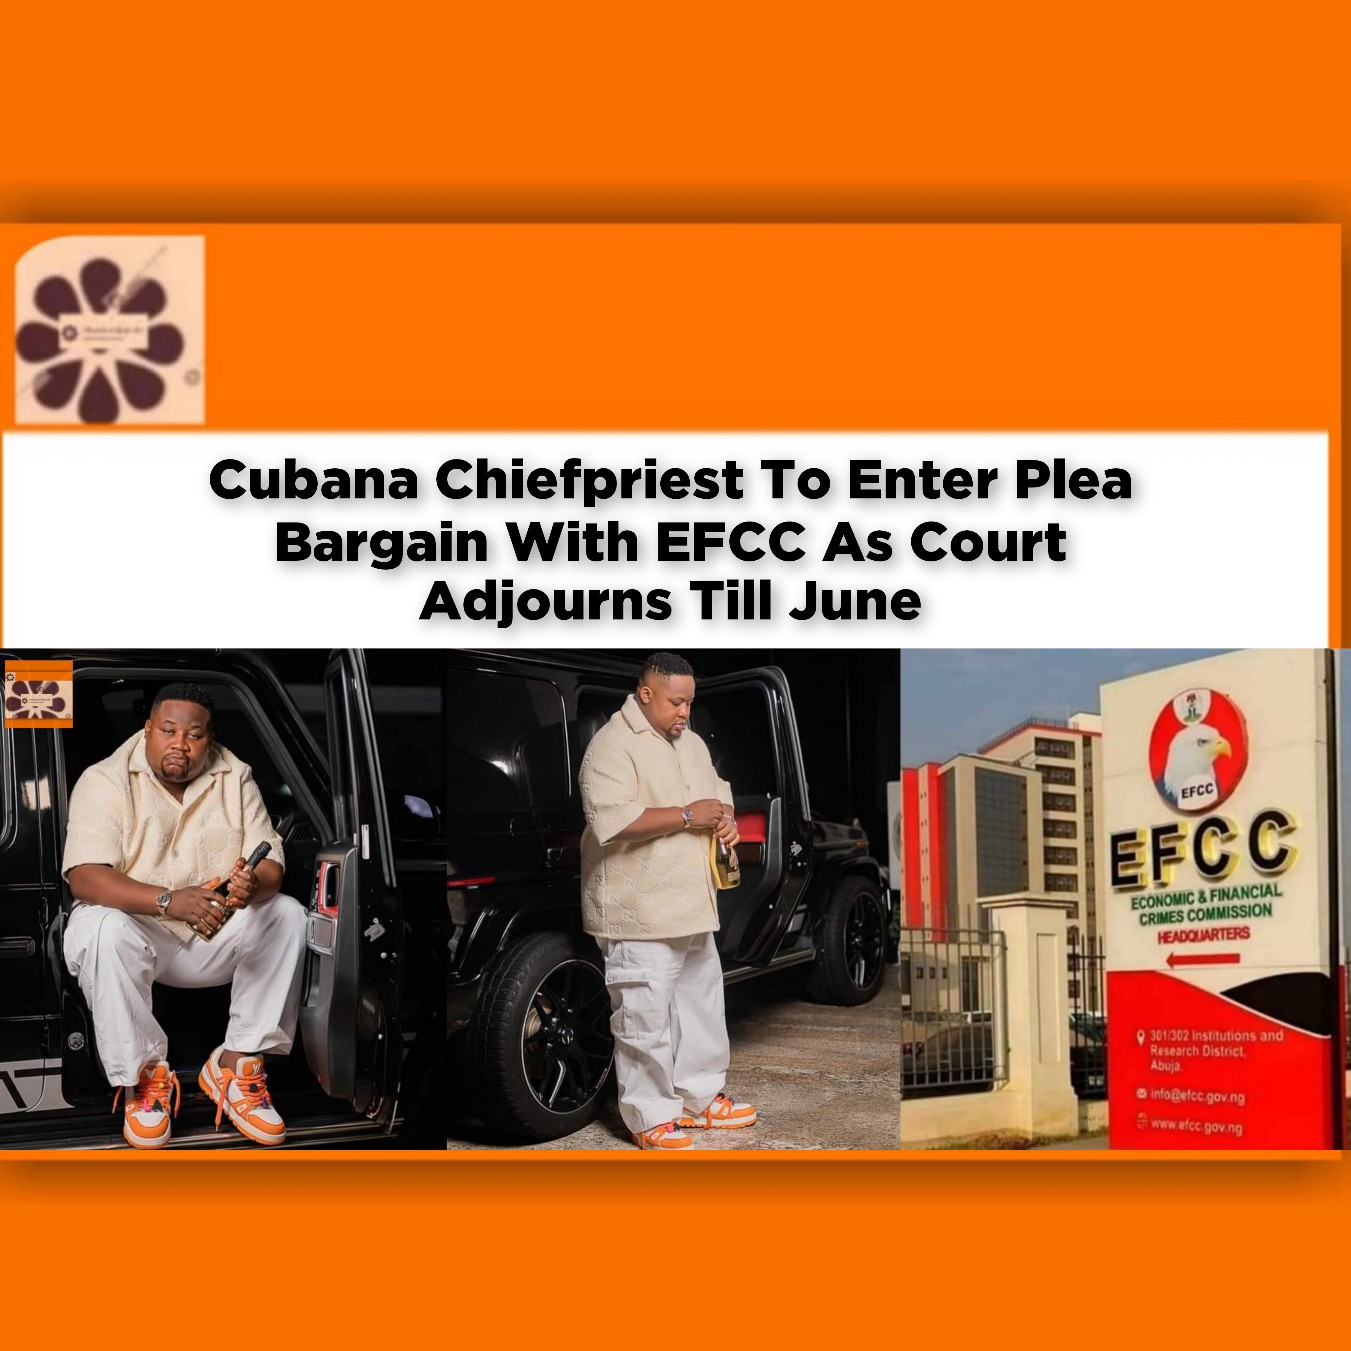 Cubana Chiefpriest To Enter Plea Bargain With EFCC As Court Adjourns Till June ~ OsazuwaAkonedo #Goodwin